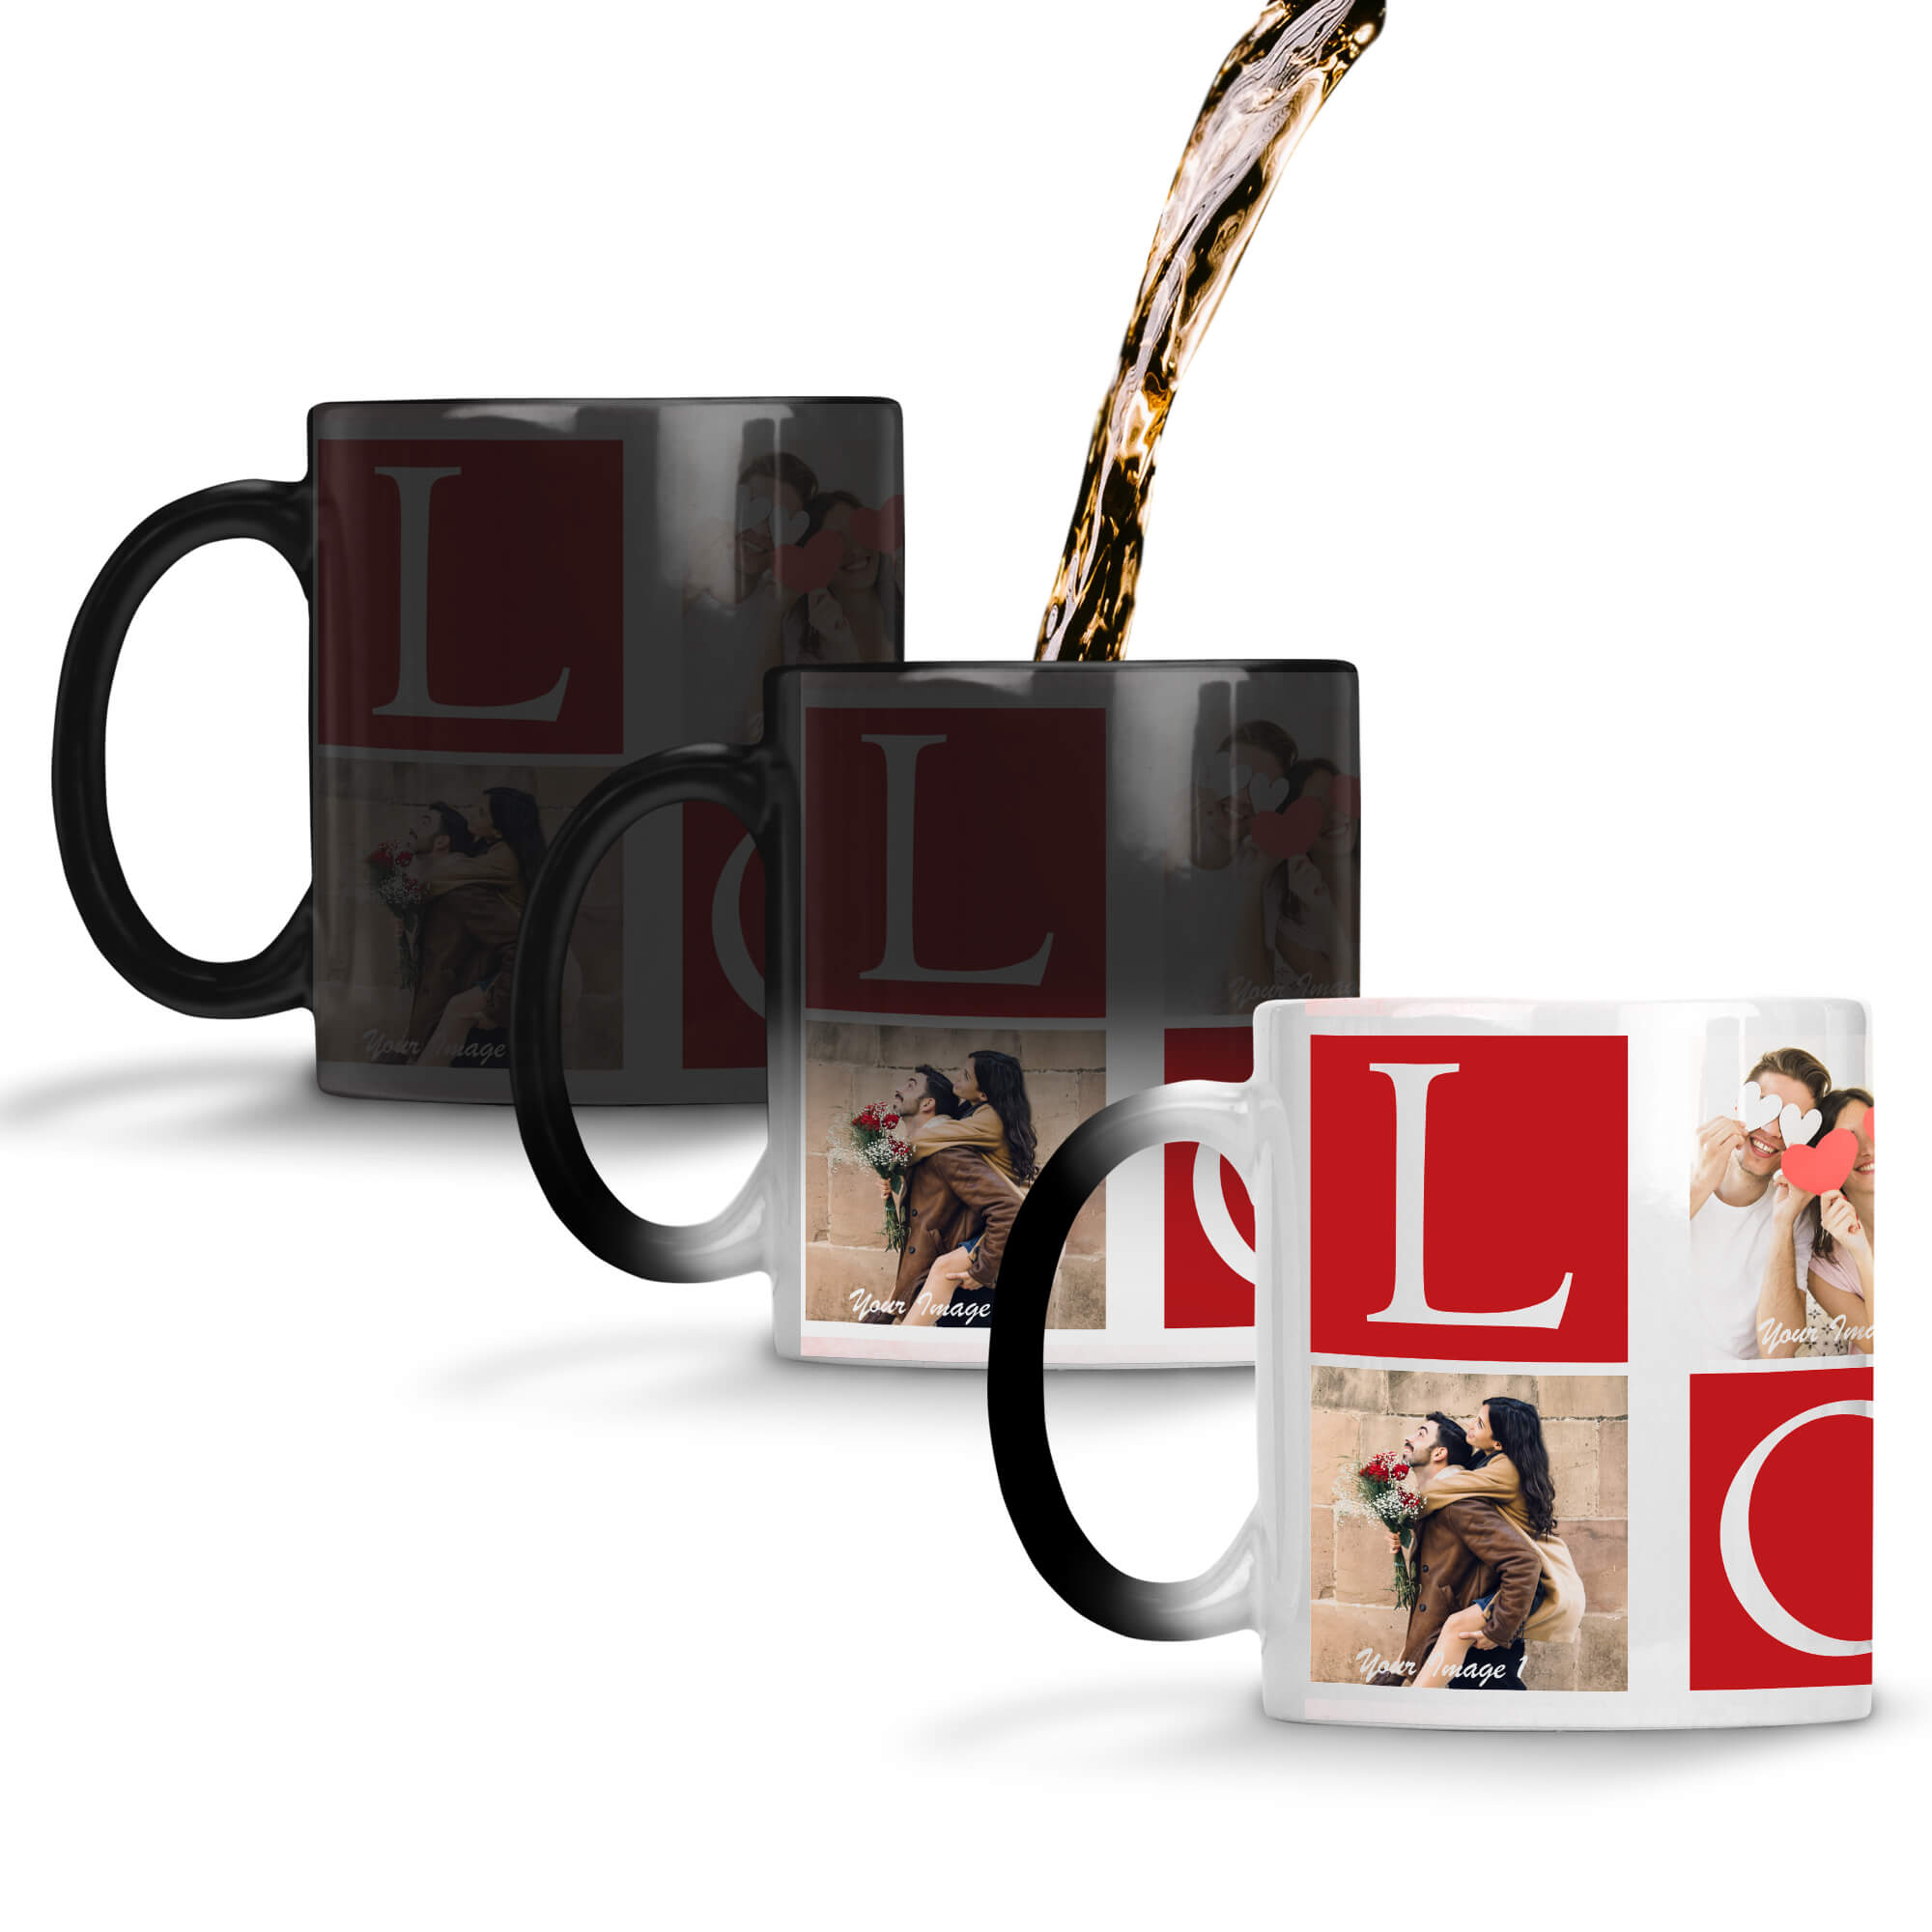 LOVE Photos Coffee Mug Magic